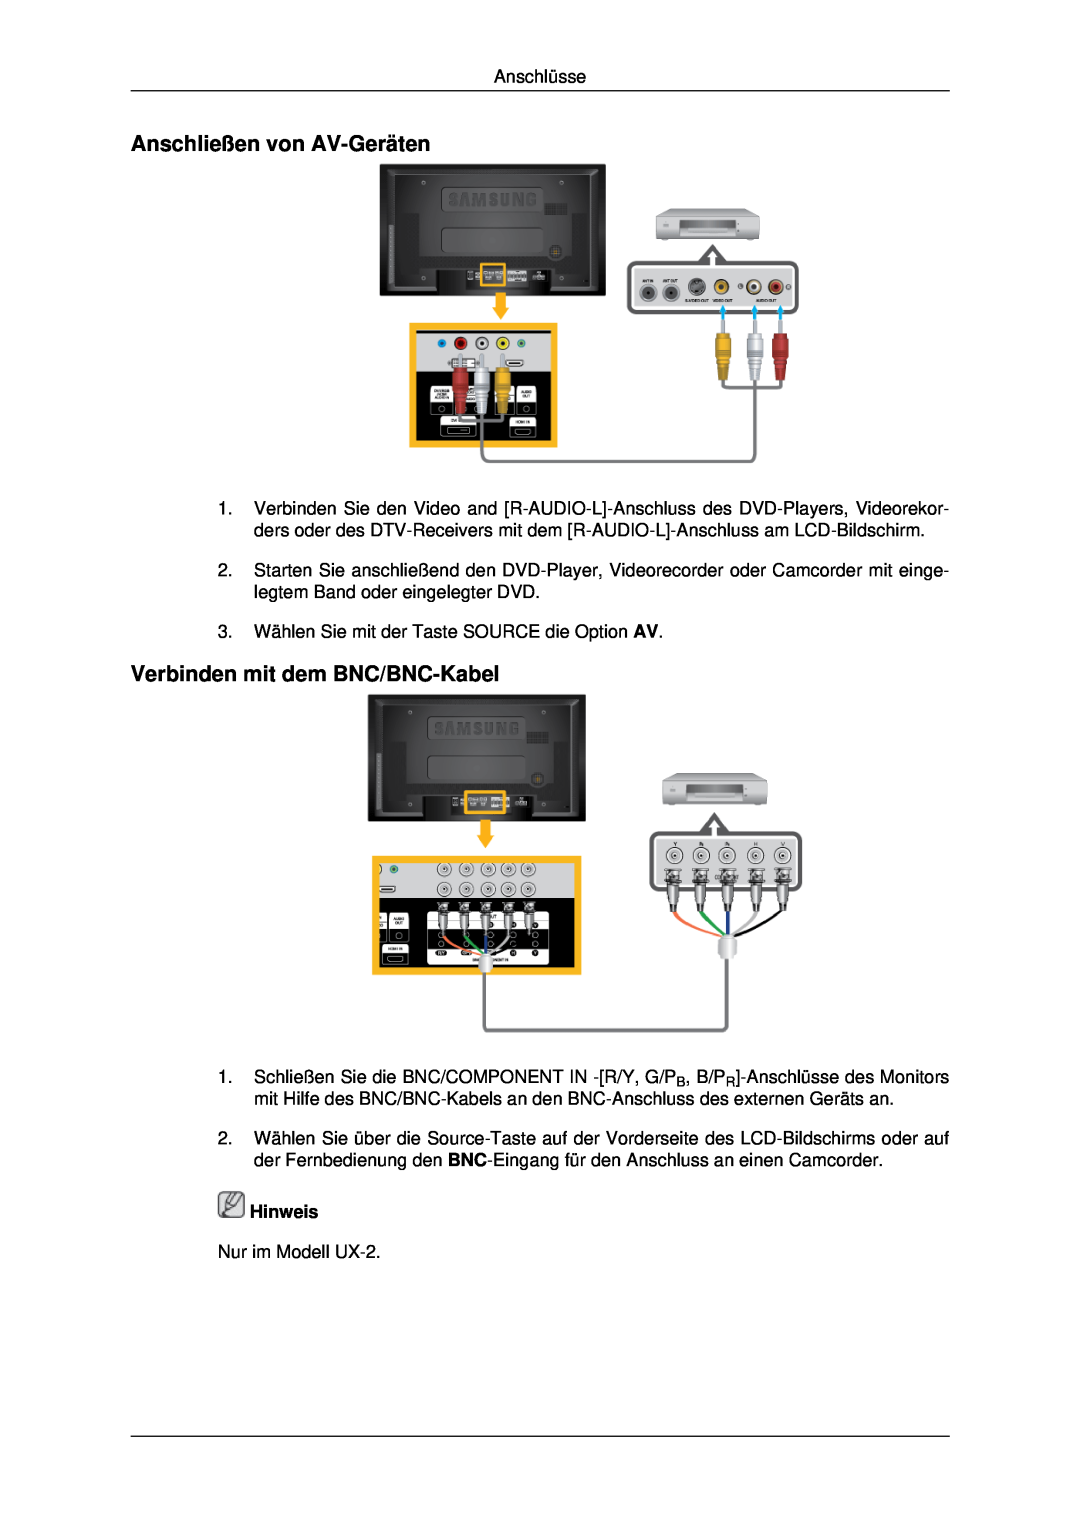 Samsung LH46MSTABB/EN, LH46MRPLBF/EN, LH40MRTLBC/EN Anschließen von AV-Geräten, Verbinden mit dem BNC/BNC-Kabel, Hinweis 